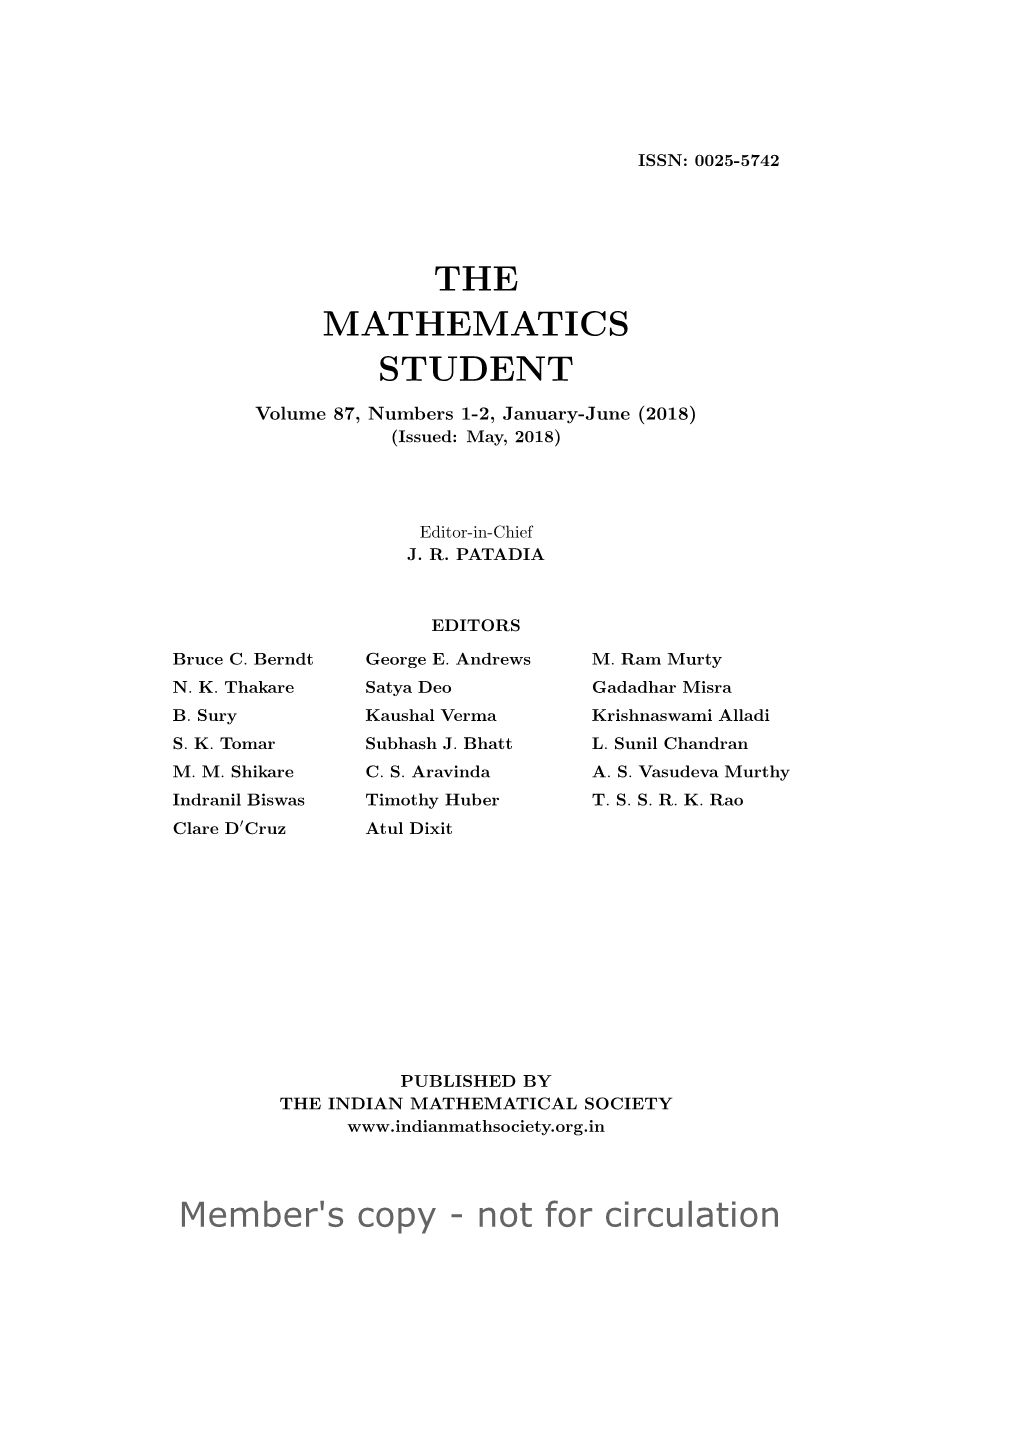 Math. Student 2018-Part-1